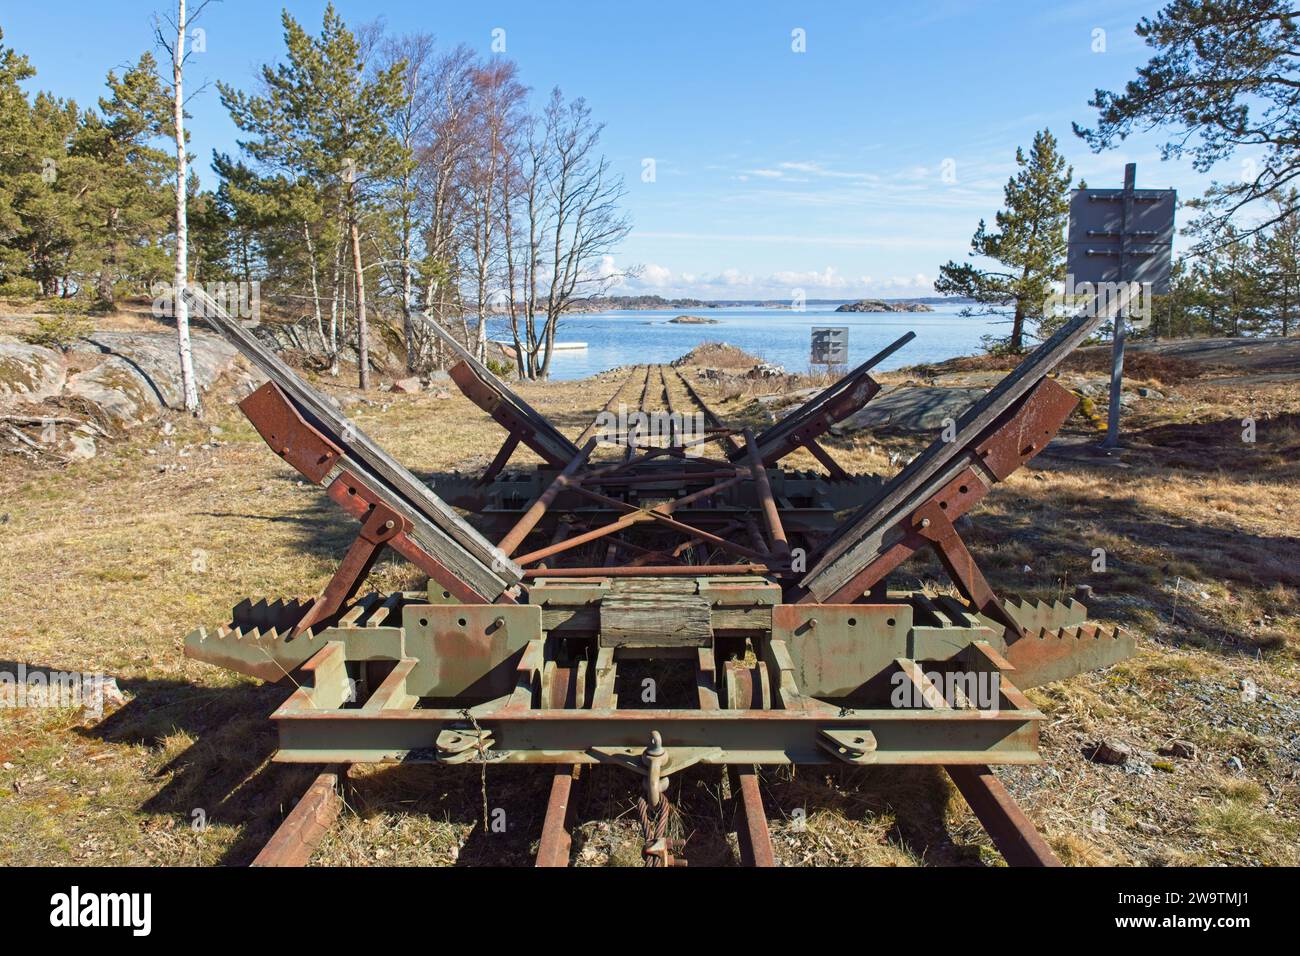 An old rusty rail boat ramp or boat deployer on platform, Örö, Kemiönsaari, Finland. Stock Photo